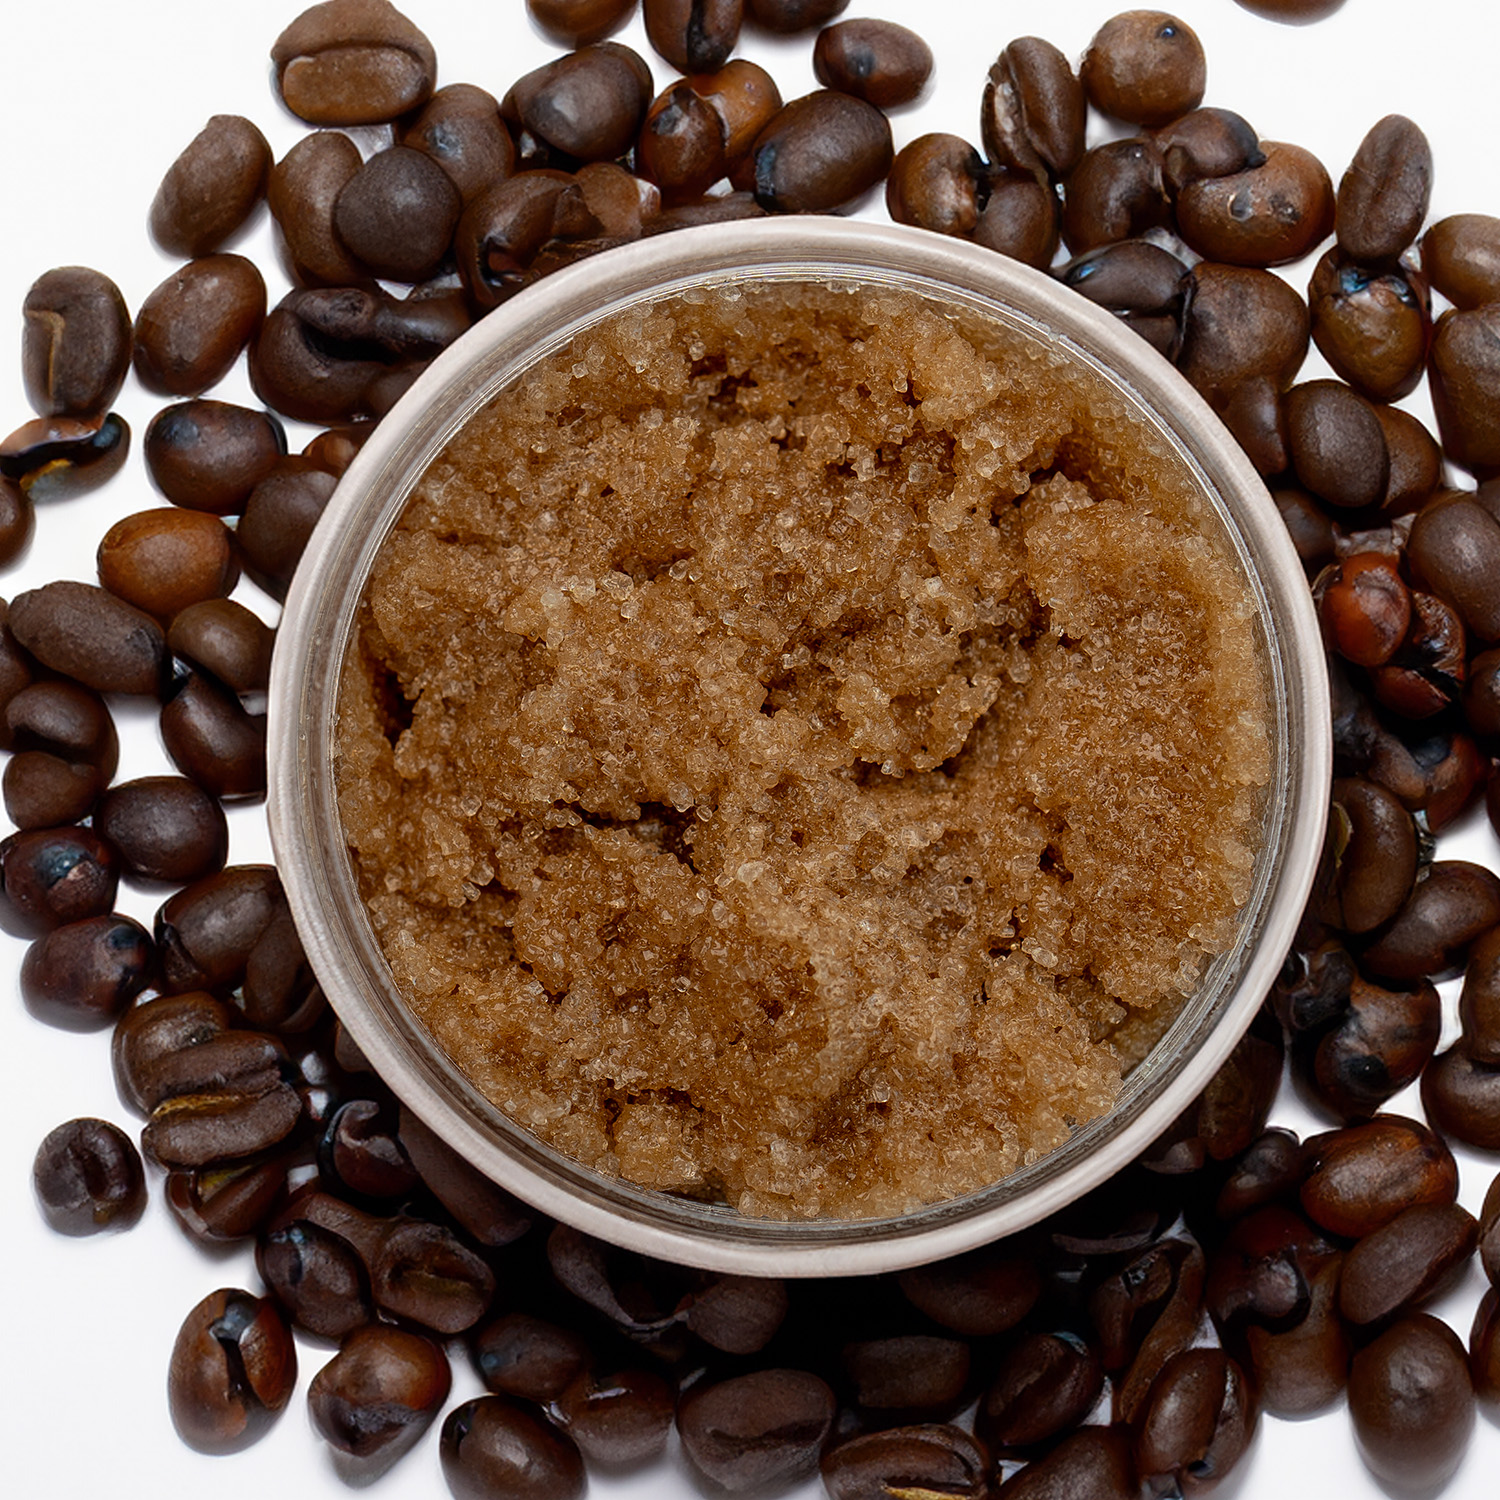 Sugaring NYC Signature Sugar Scrub – Coffee Beans